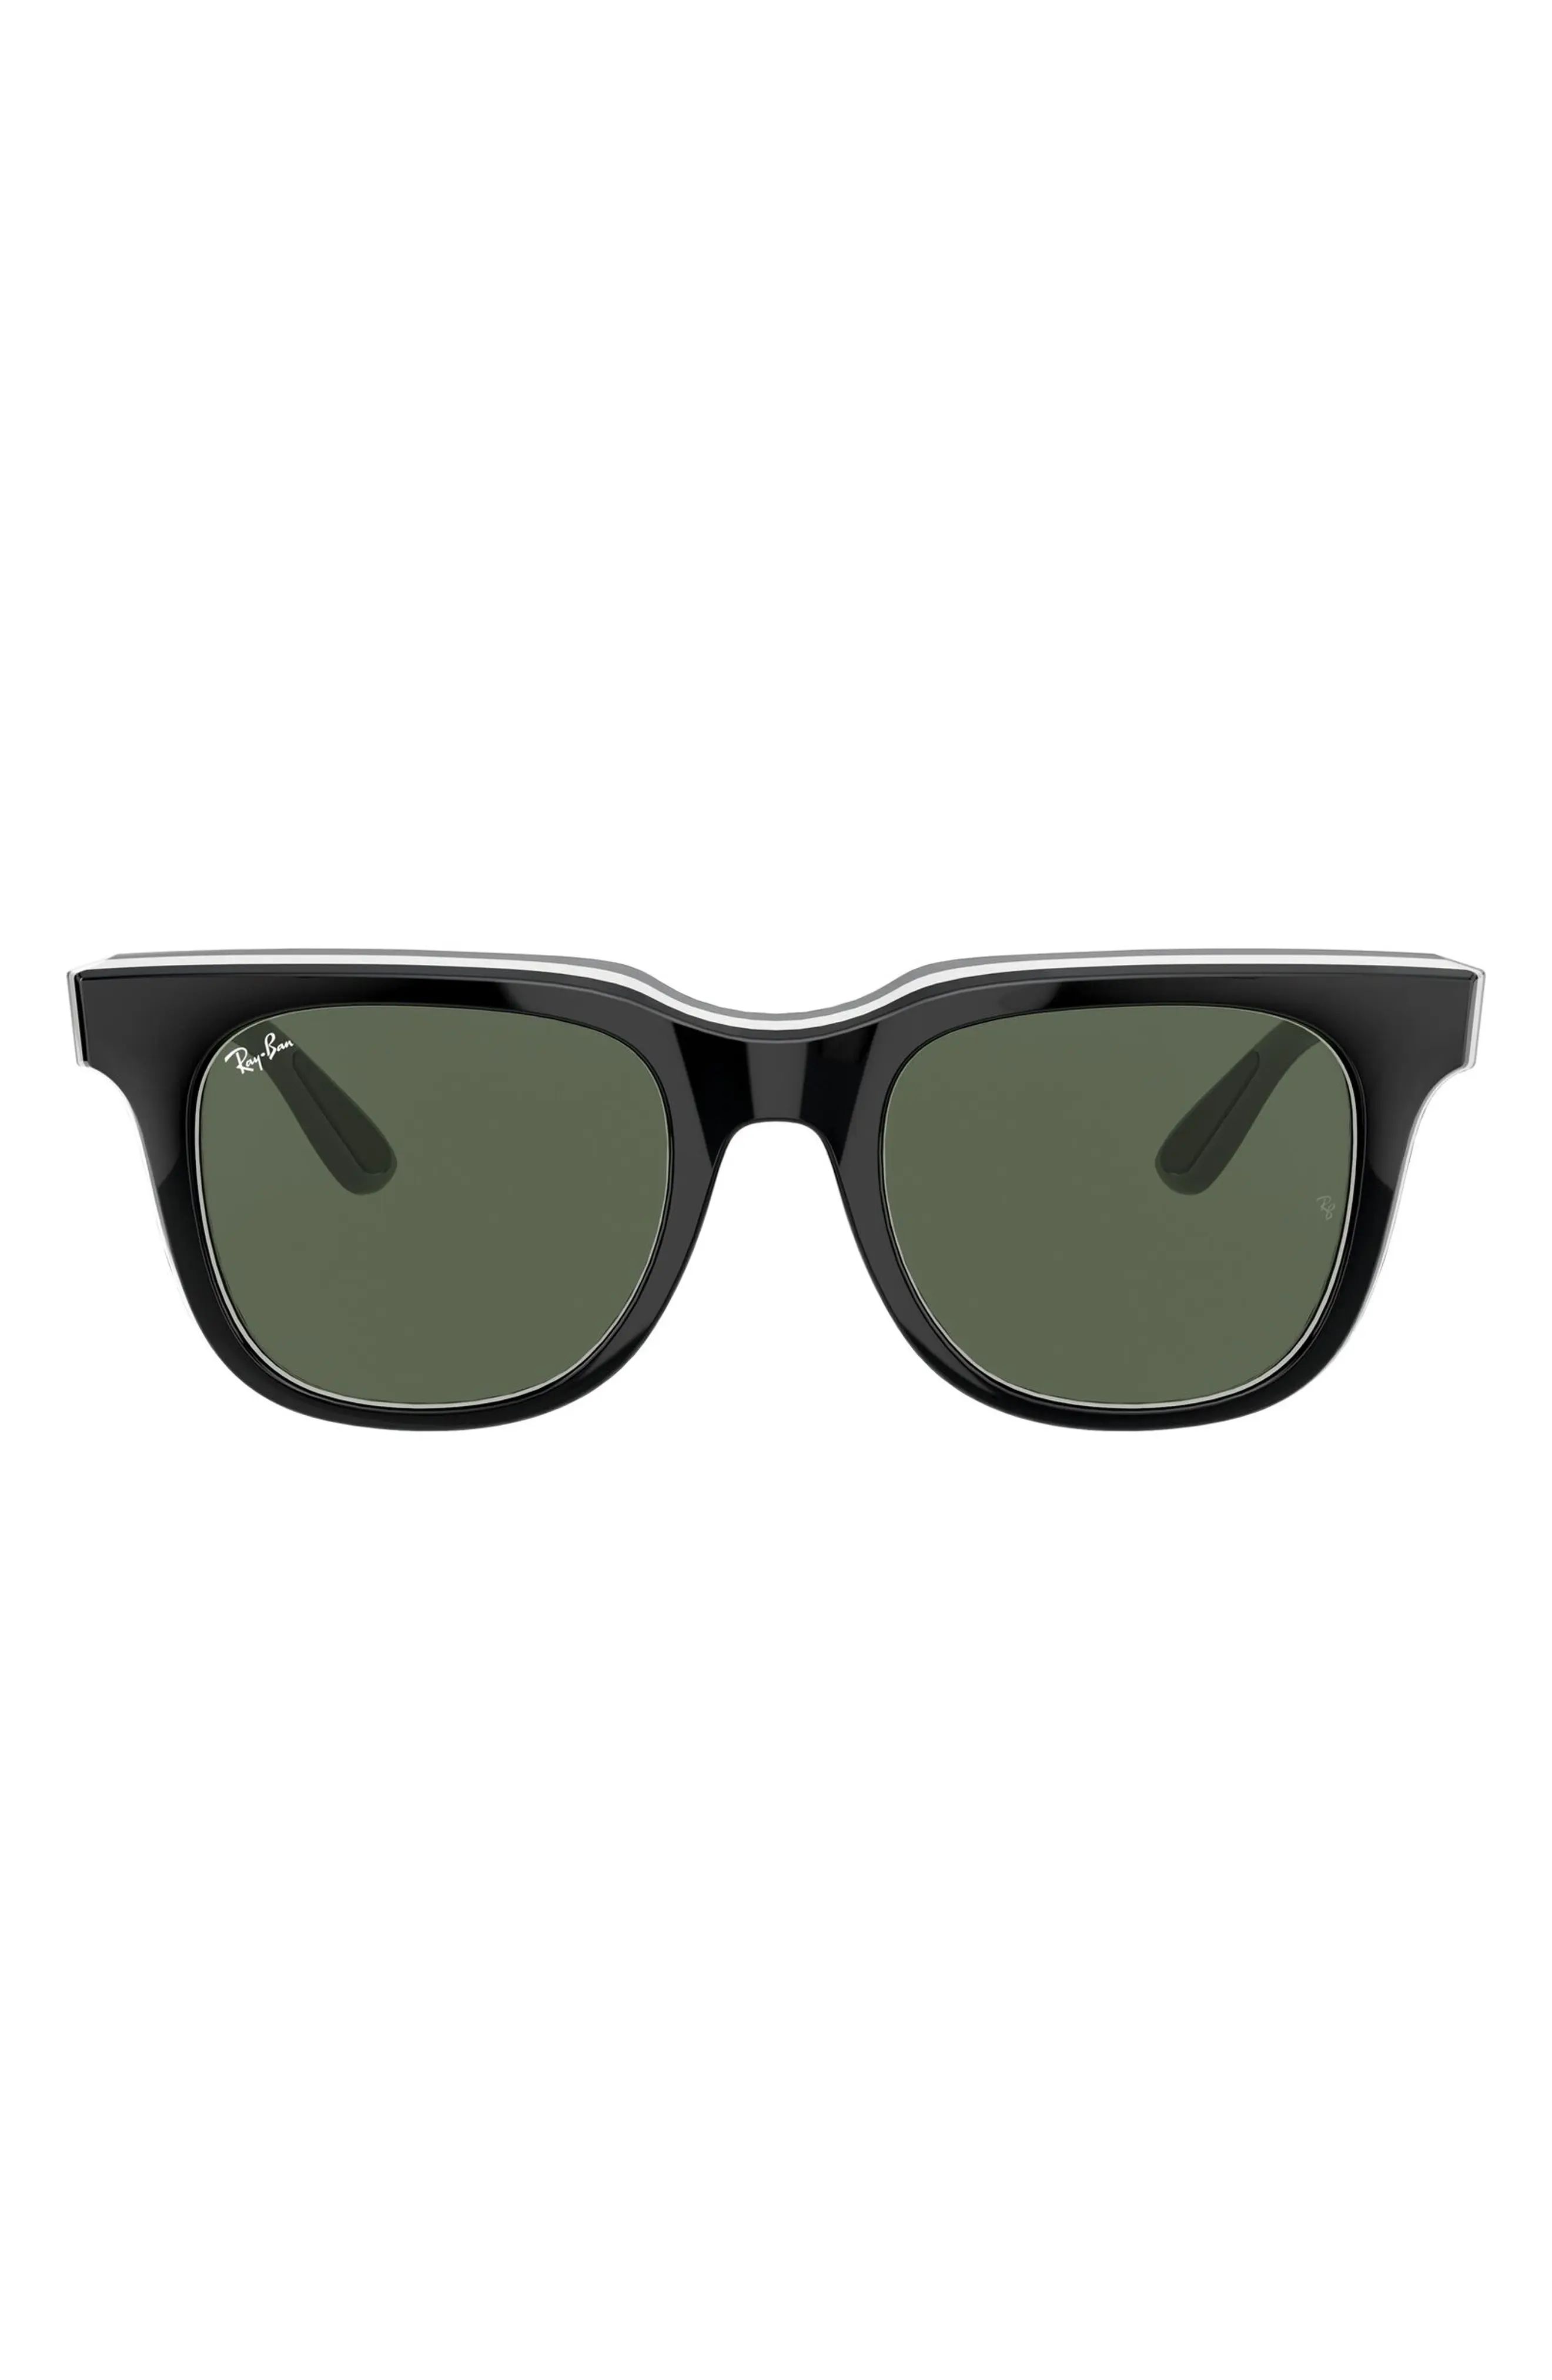 Ray-Ban Jeffrey 51mm Square Sunglasses - Black/ White/ Gray/ Dark Green | Nordstrom